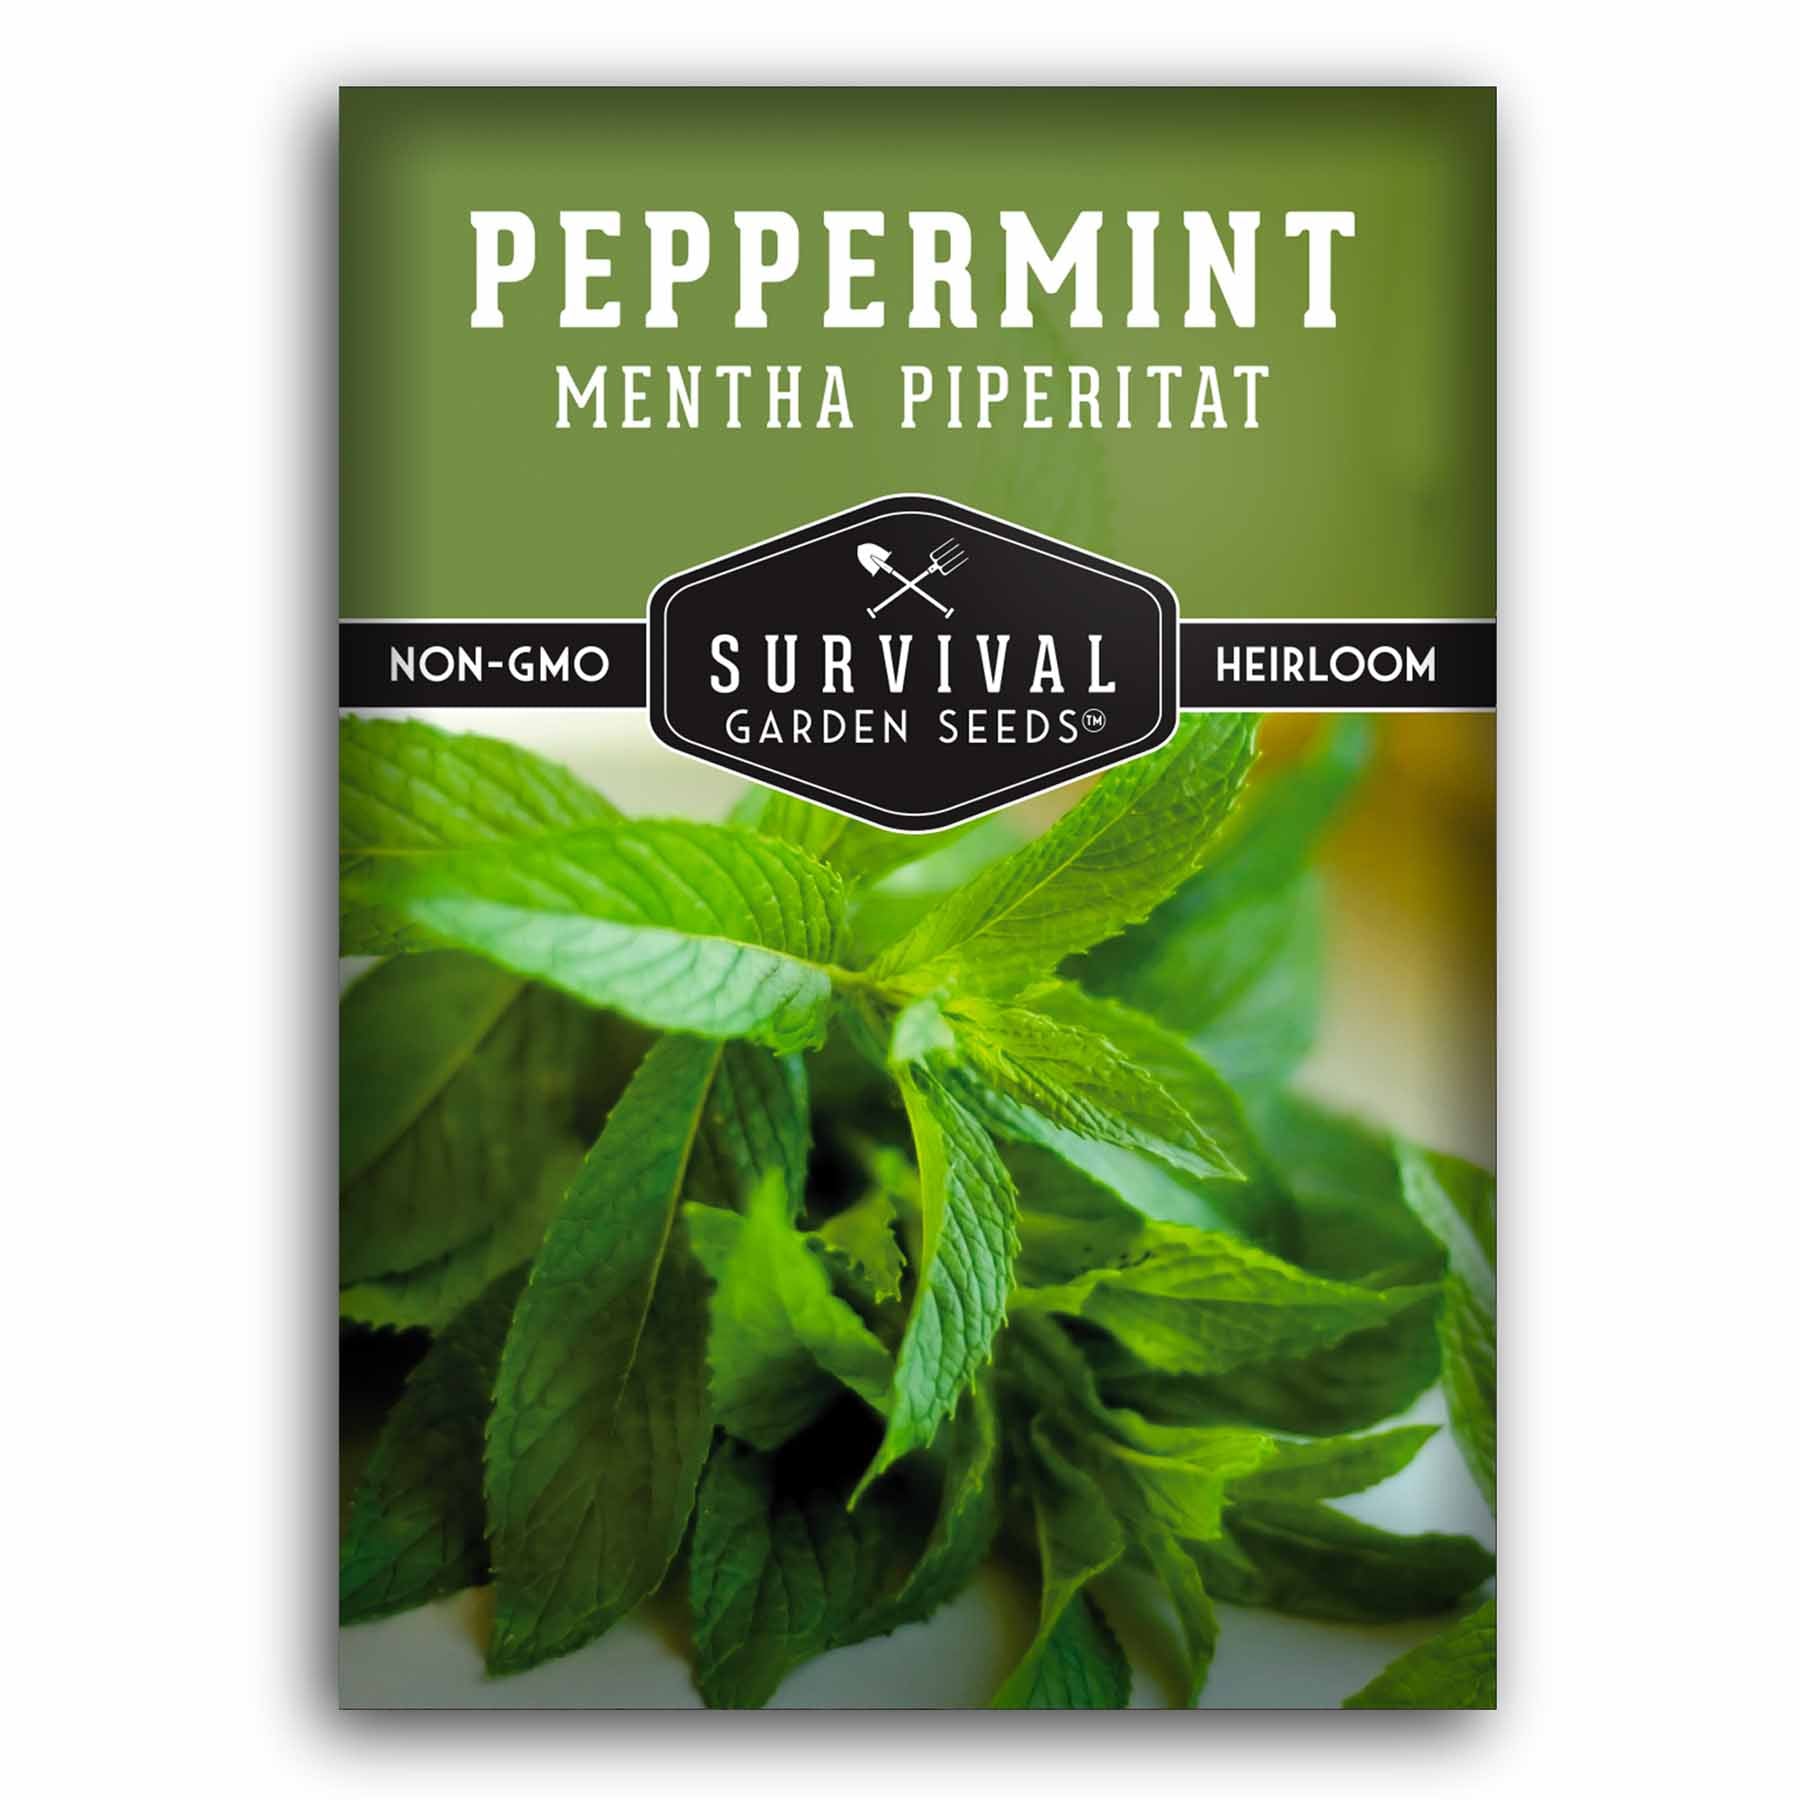 Peppermint herb seeds